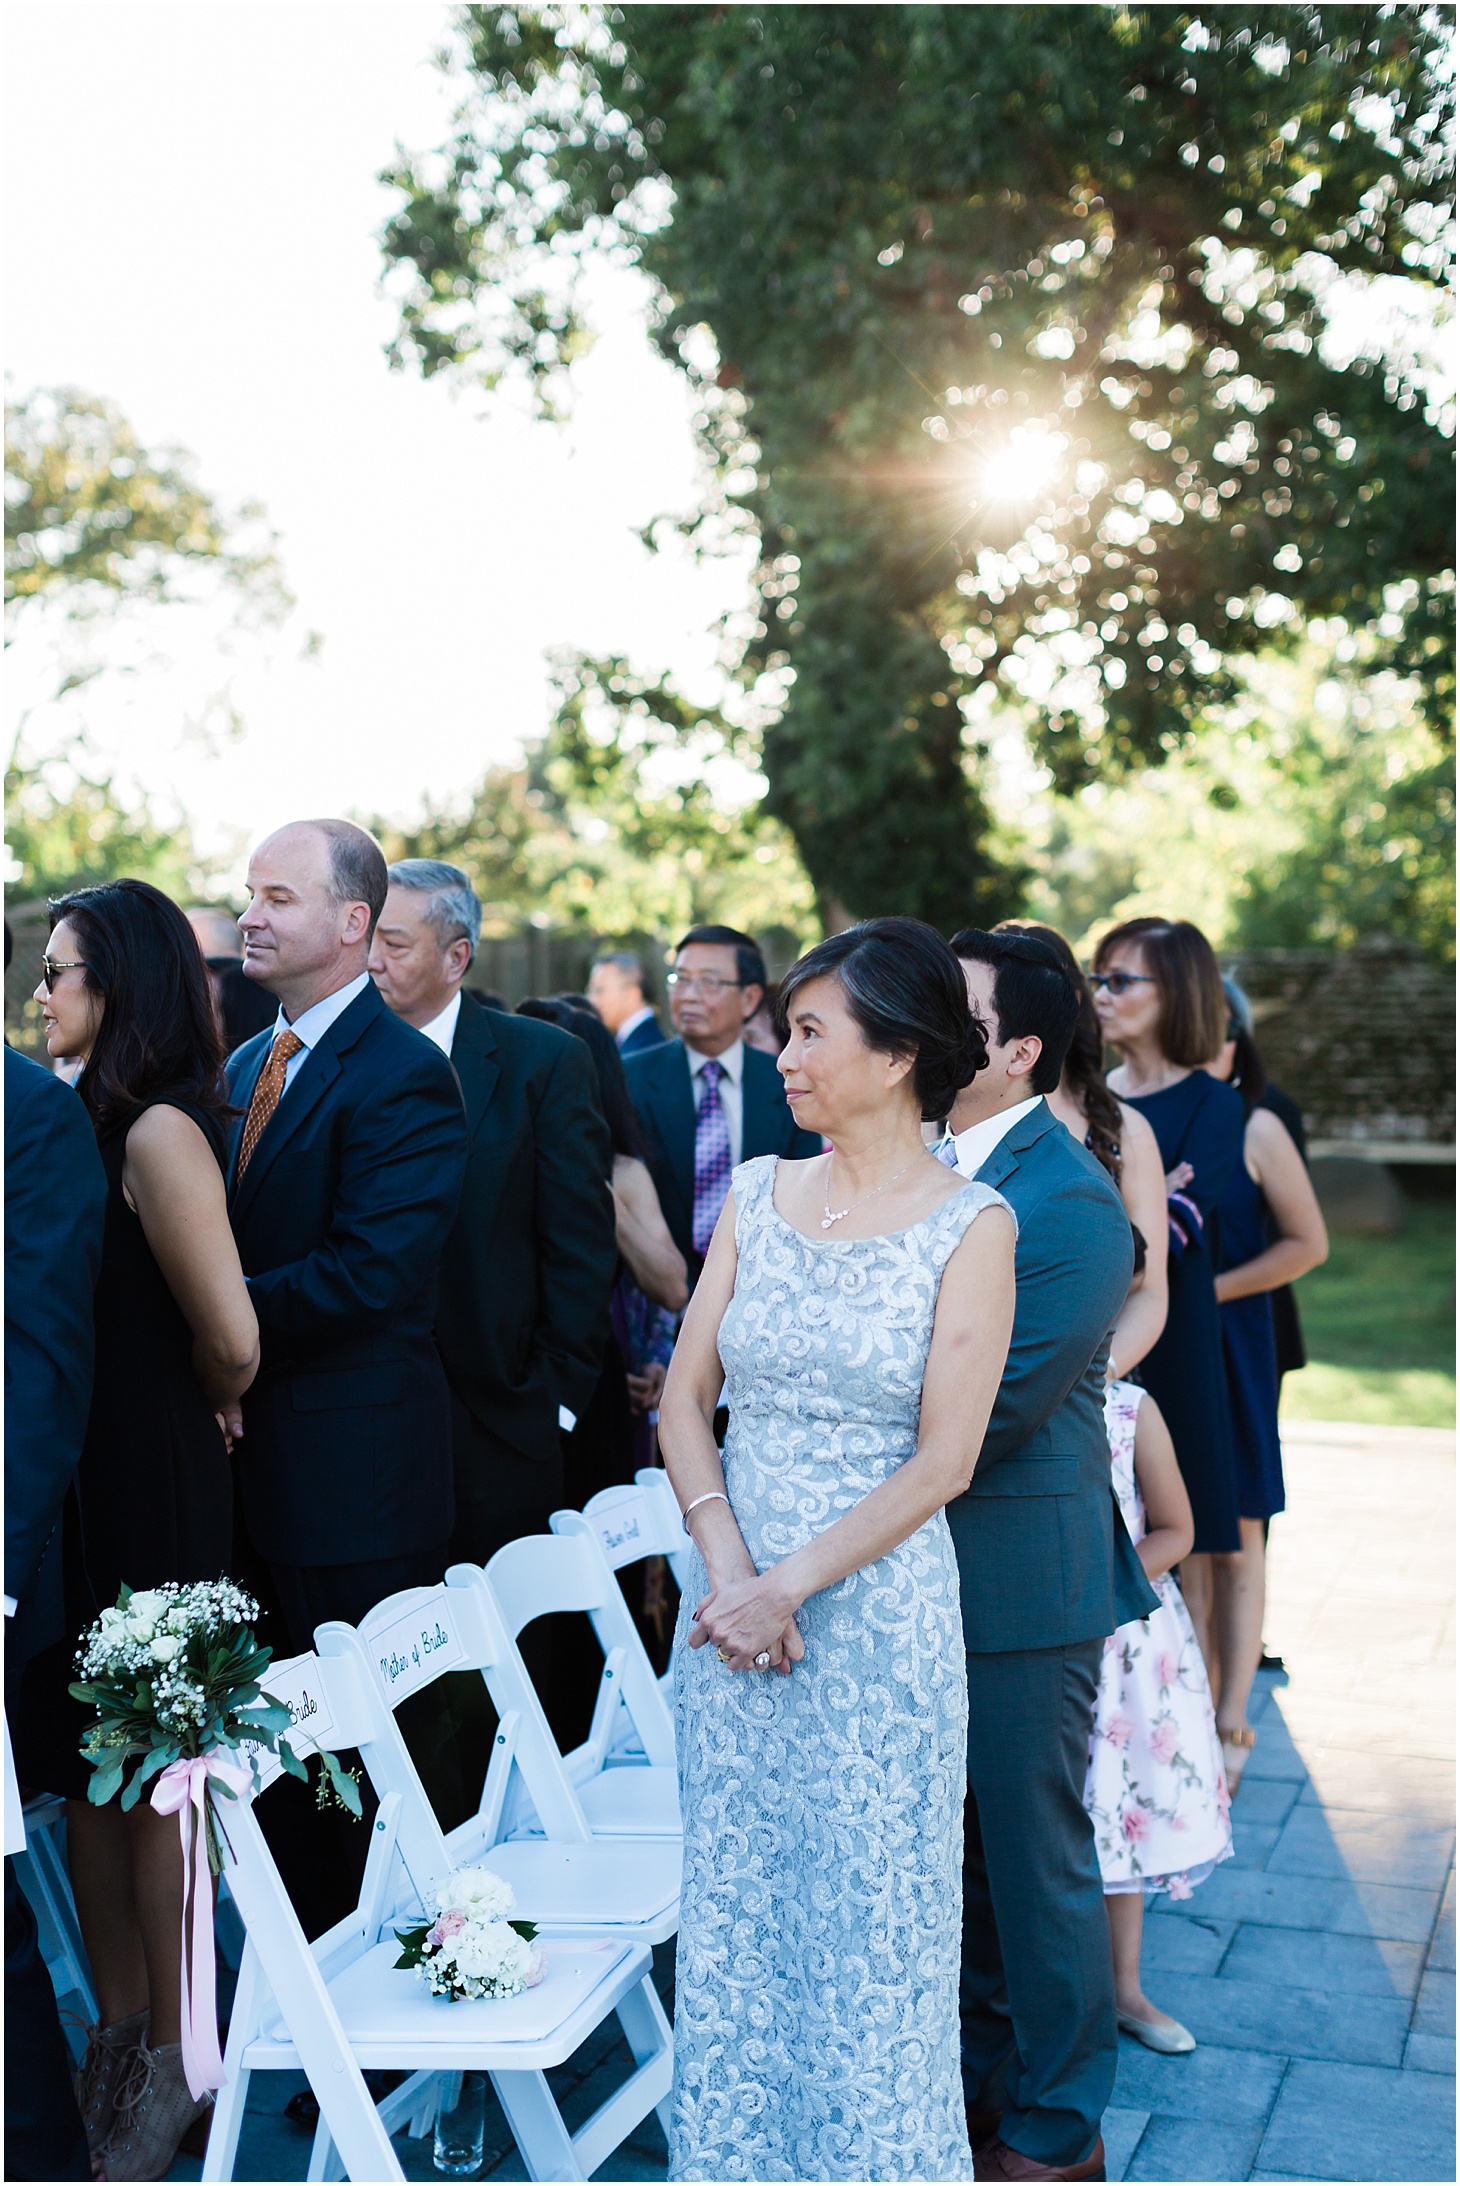 Wedding Ceremony at Raspberry Plain Manor | Elegant Fall Wedding in Leesburg, VA | Sarah Bradshaw Photography